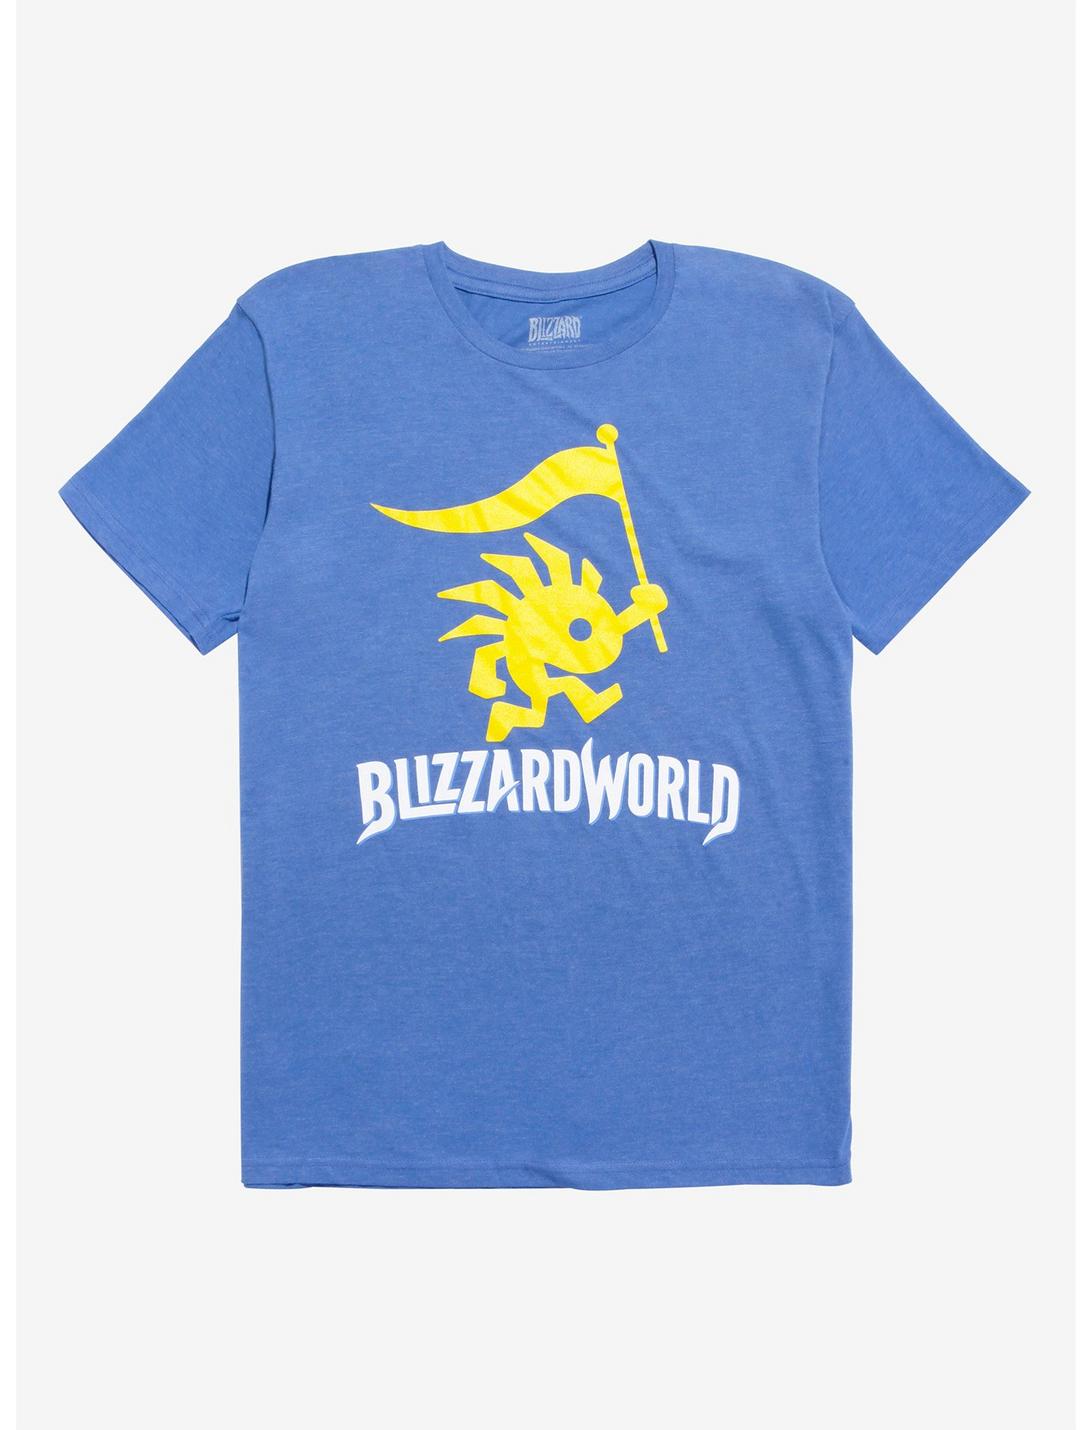 Overwatch Blizzardworld T-Shirt, YELLOW, hi-res